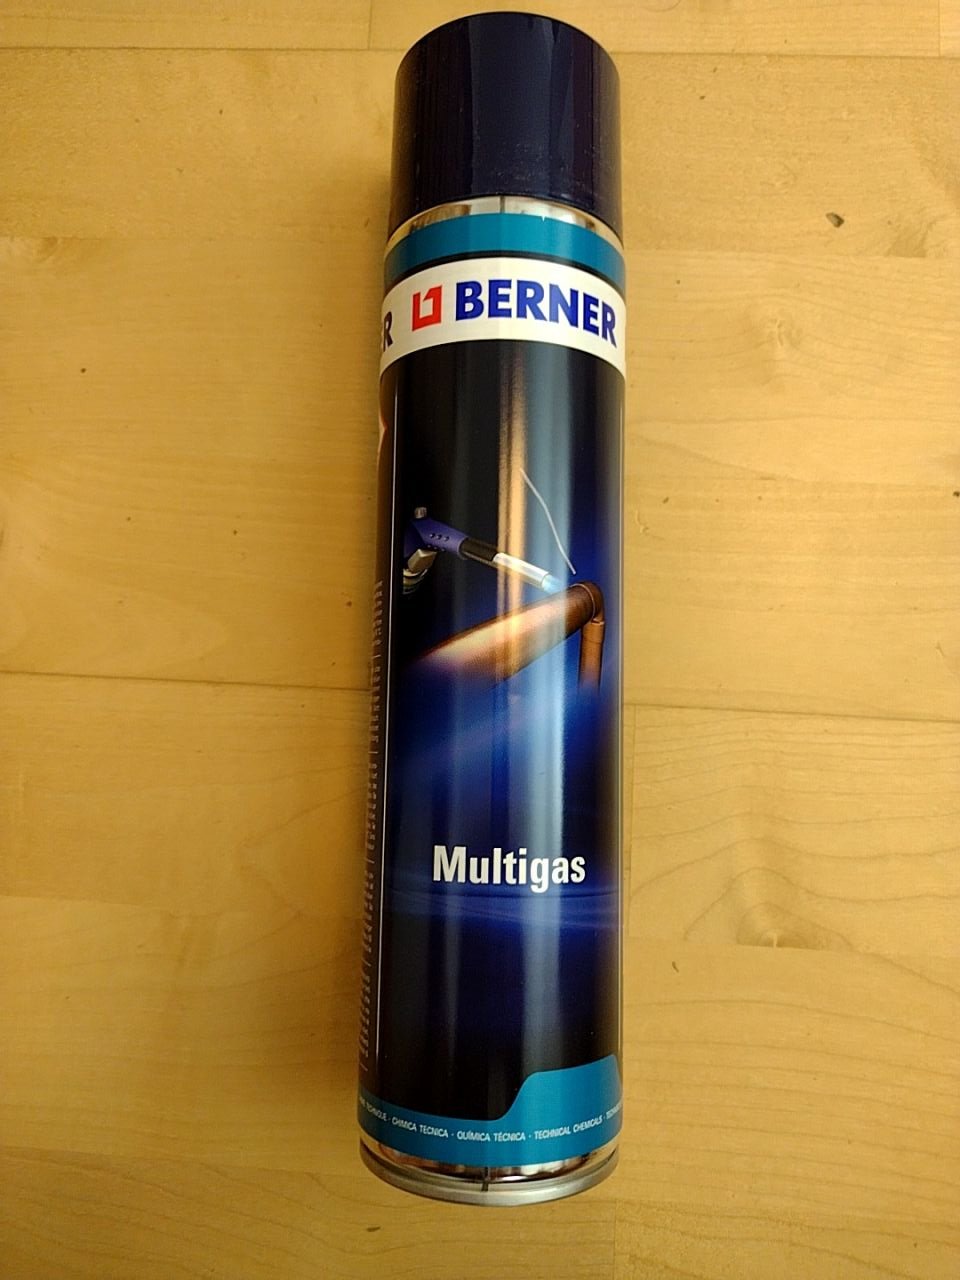 Multigas Berner 